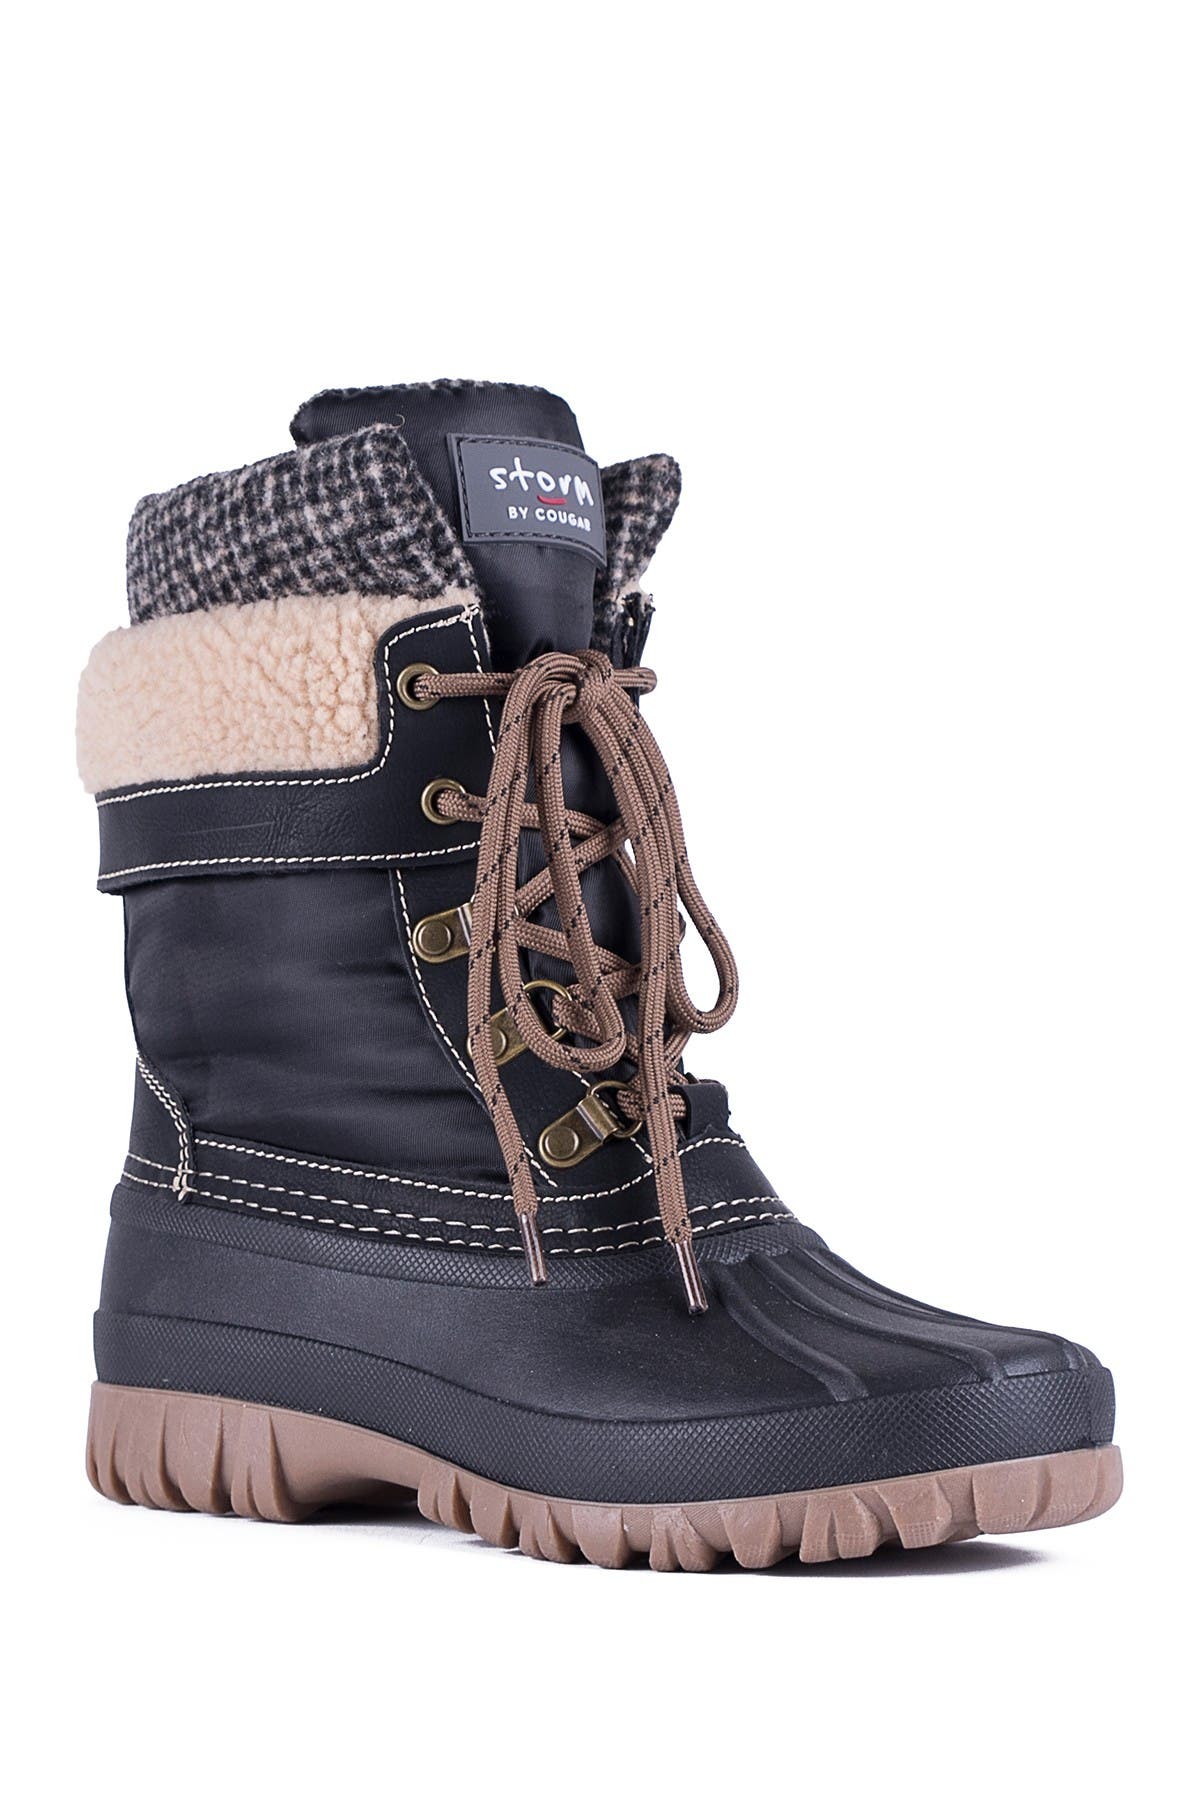 cougar creek waterproof faux shearling boot